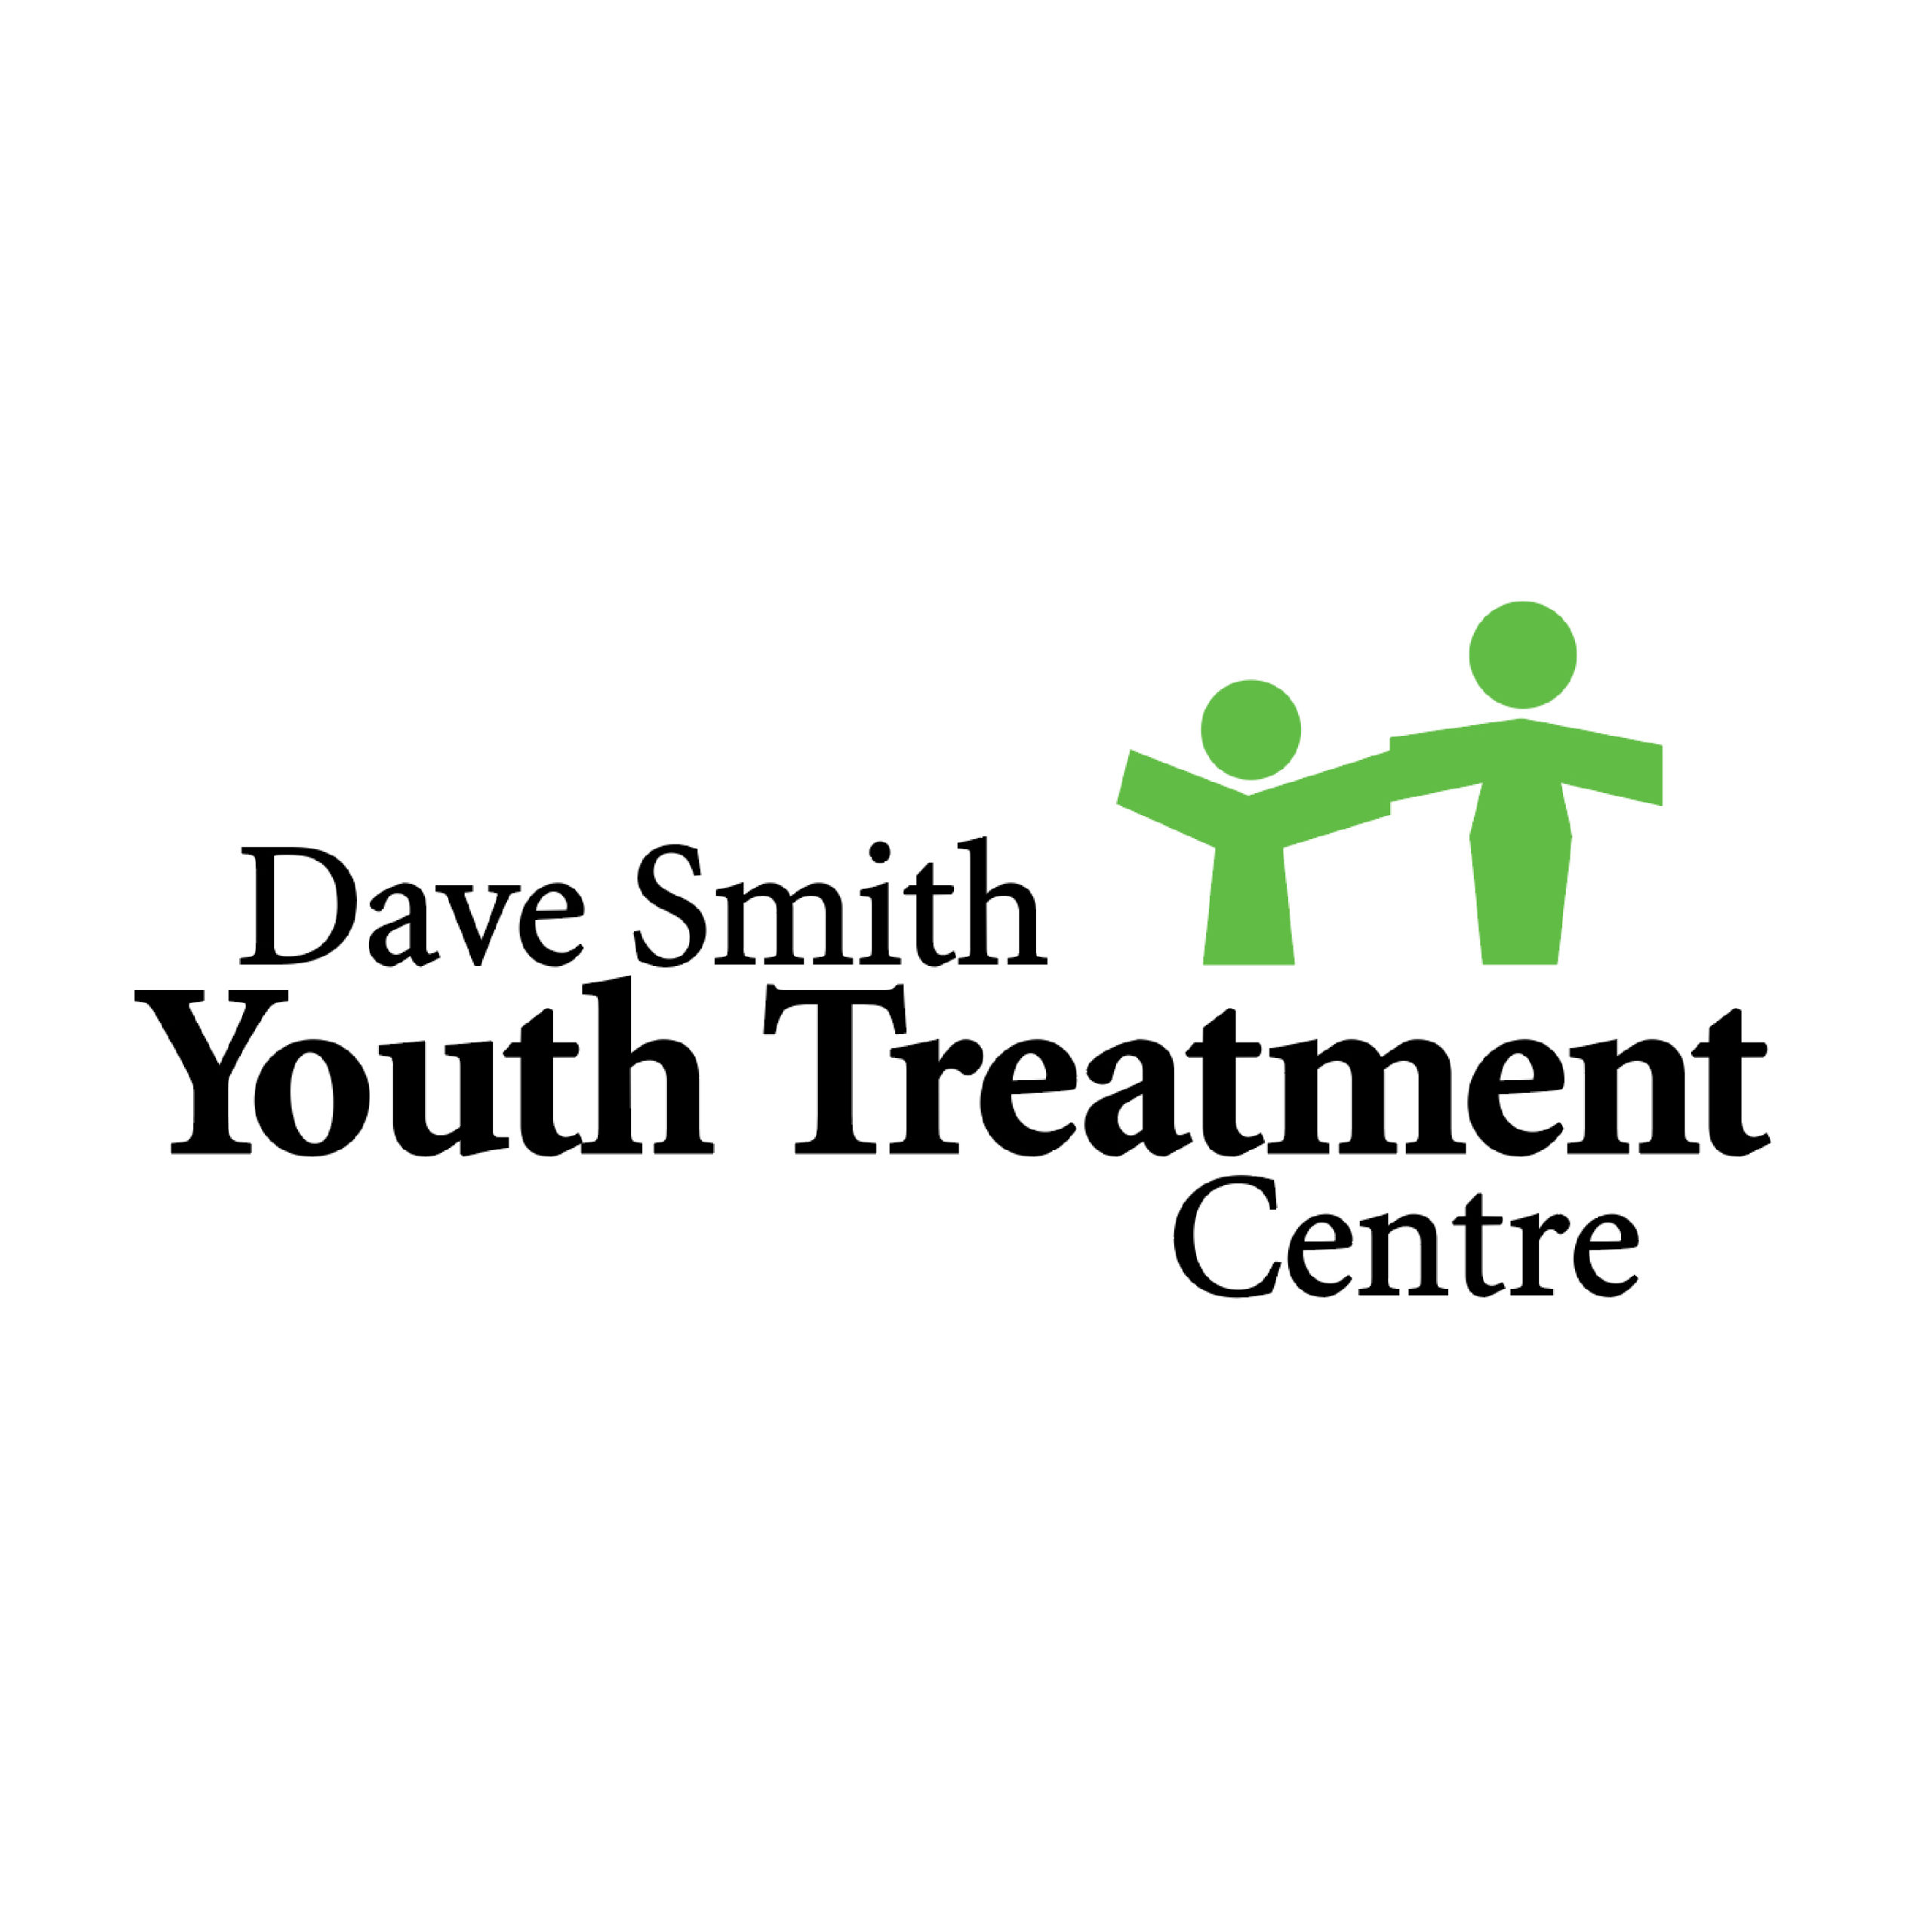 DSYTC - Dave Smith Youth Treatment Centre Logo | Brand Design